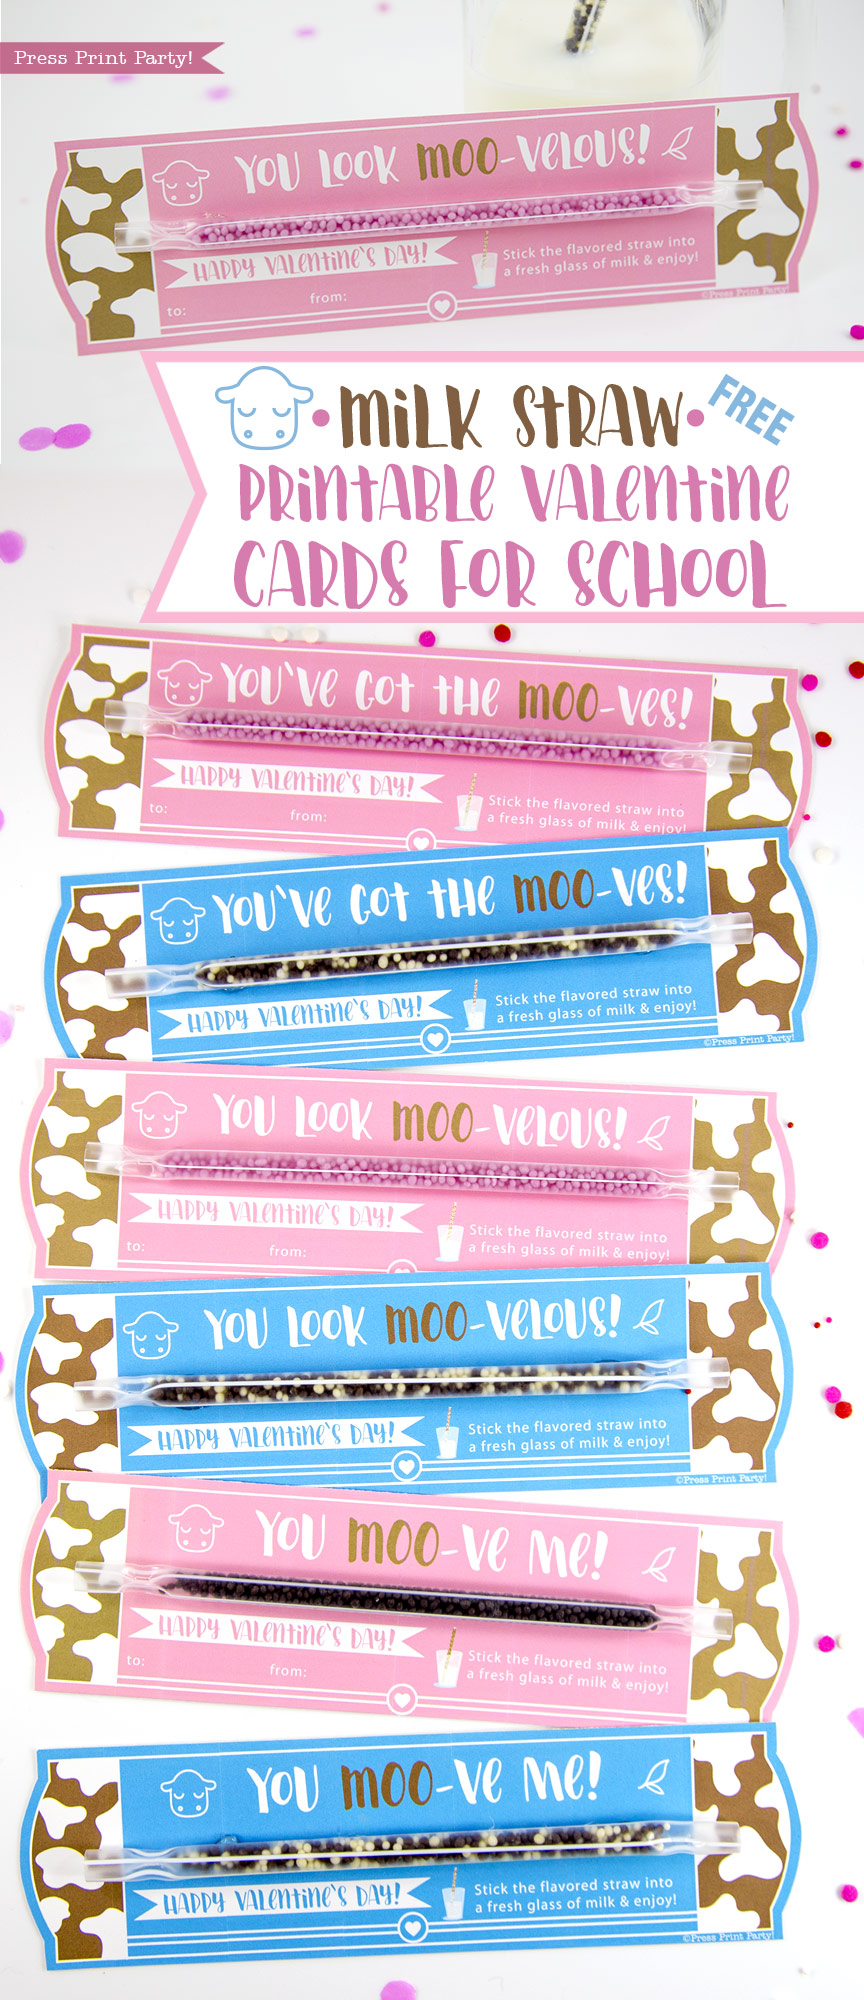 Free Printable Valentine Cards, Milk Straw - School Valentine Ideas - By Press Print Party!